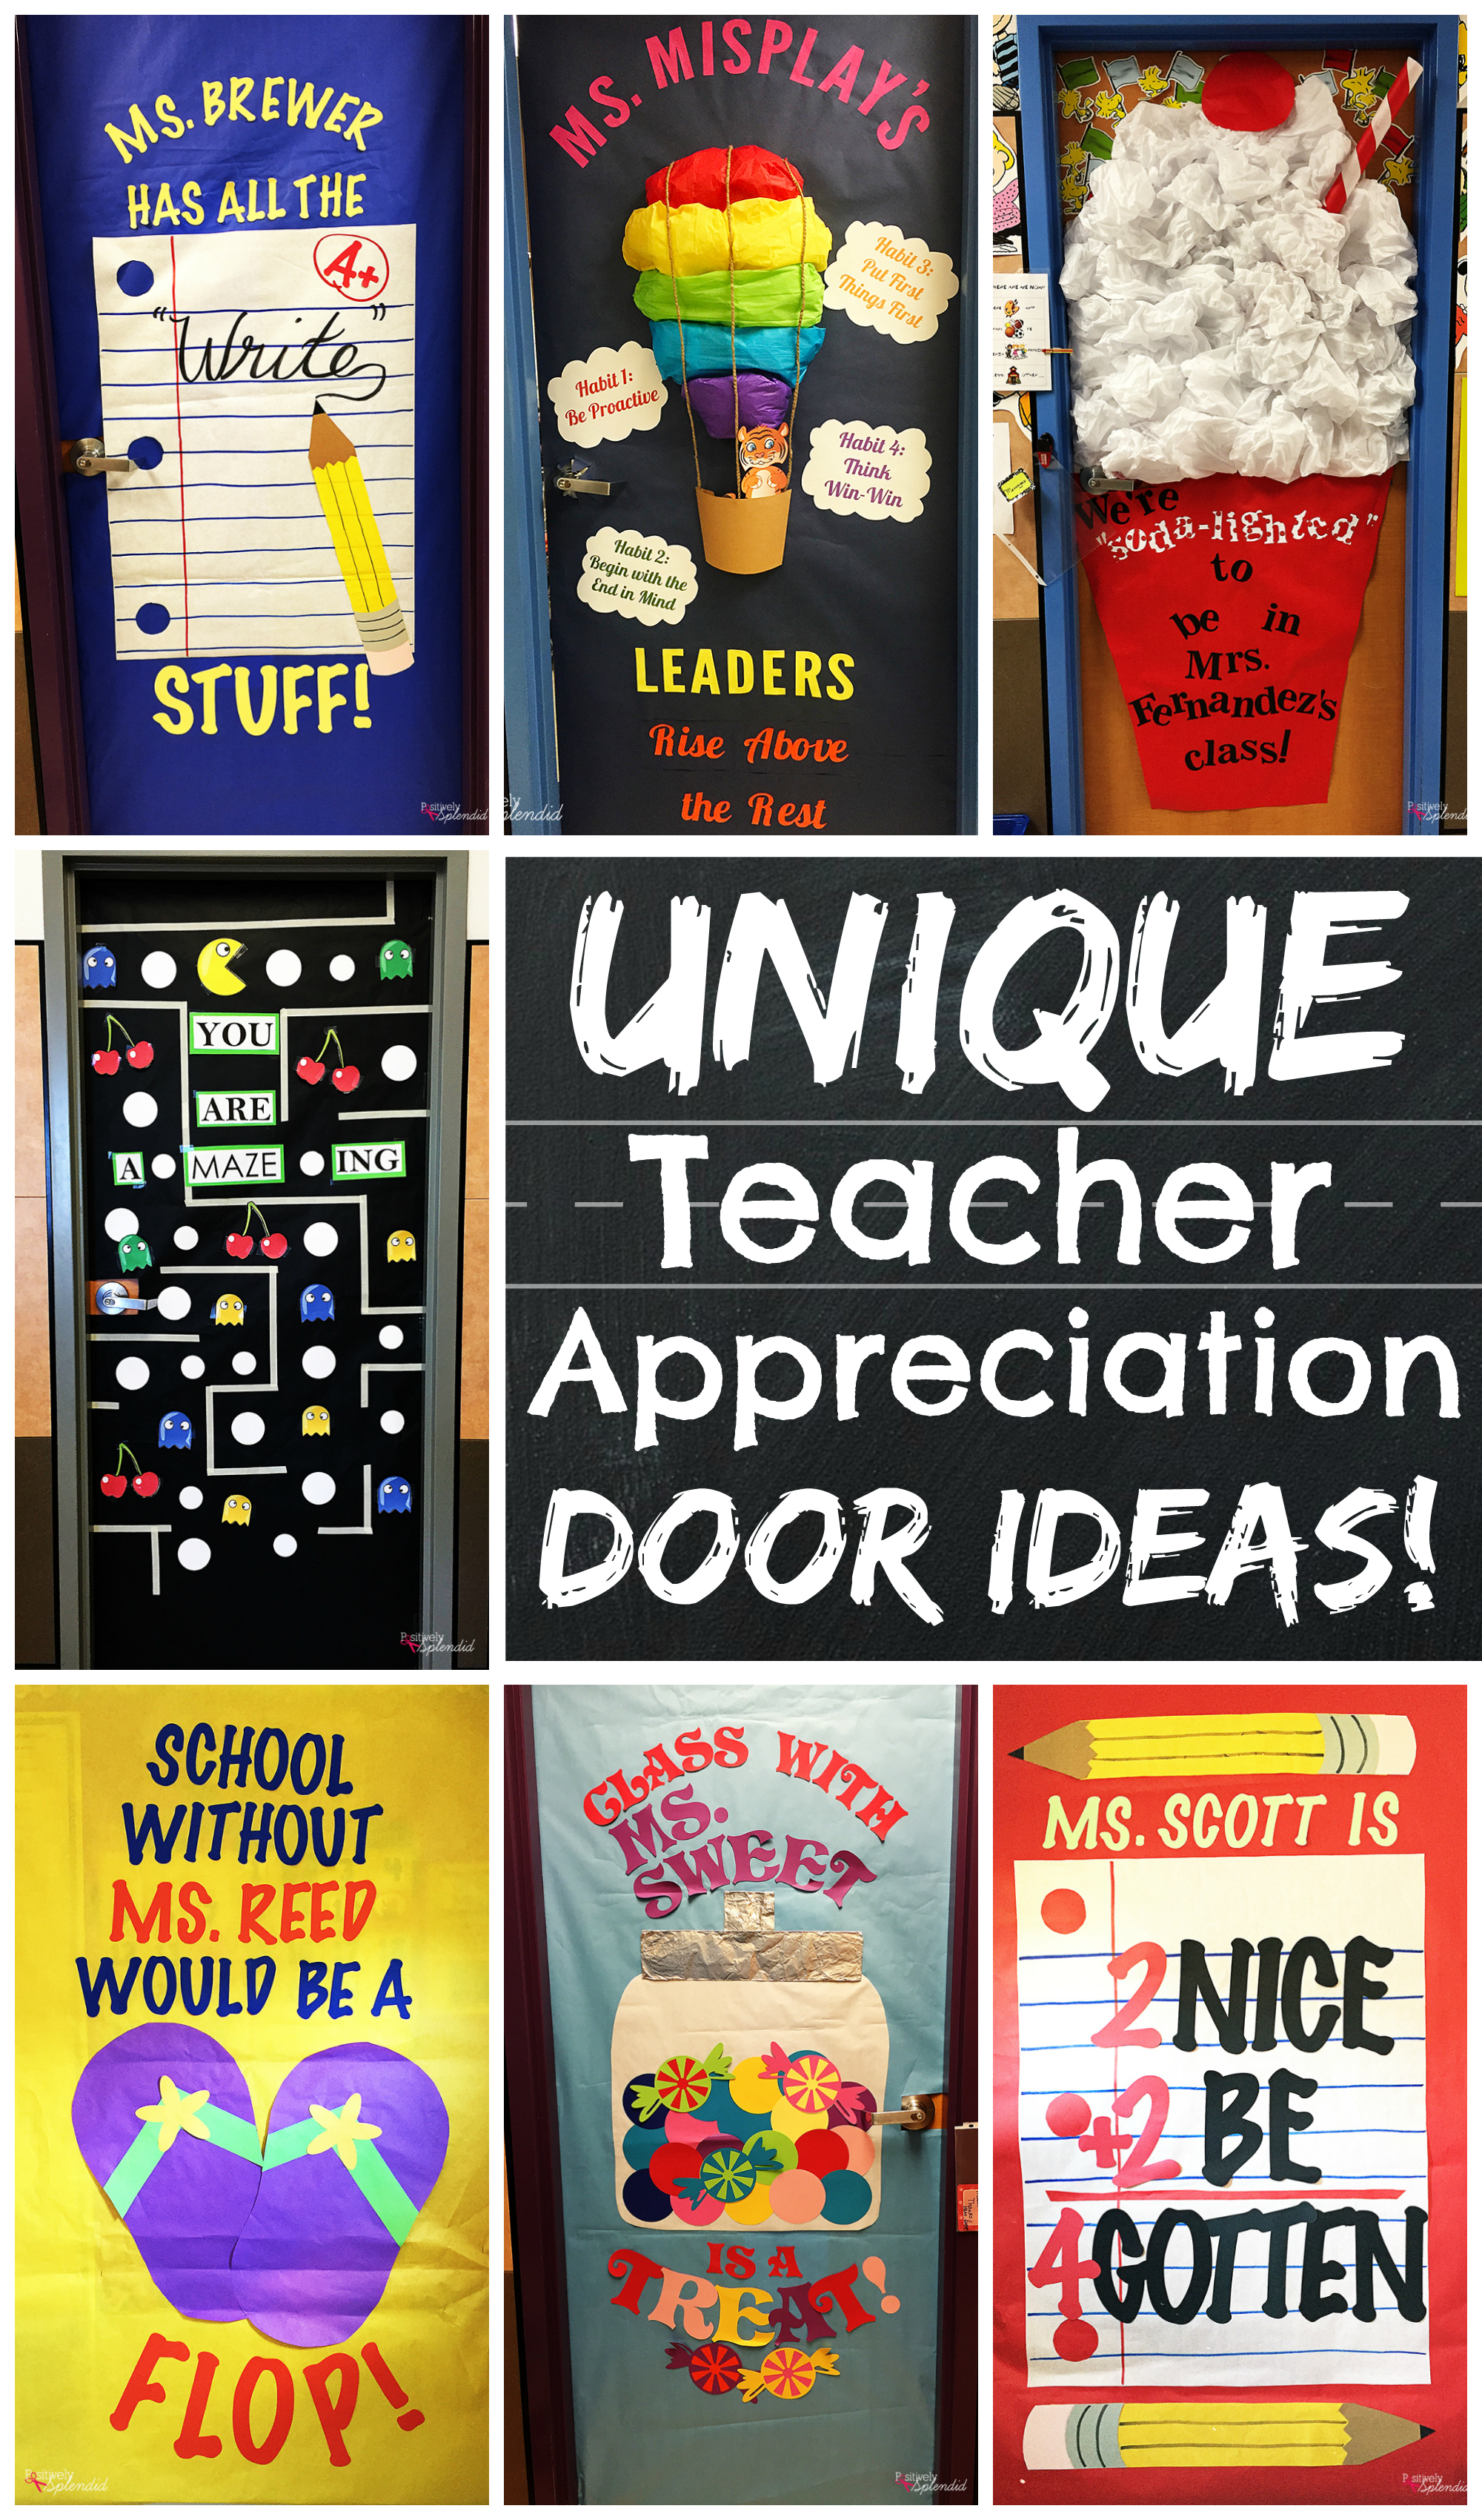 Teacher Appreciation Door Ideas Unique and Clever Designs!